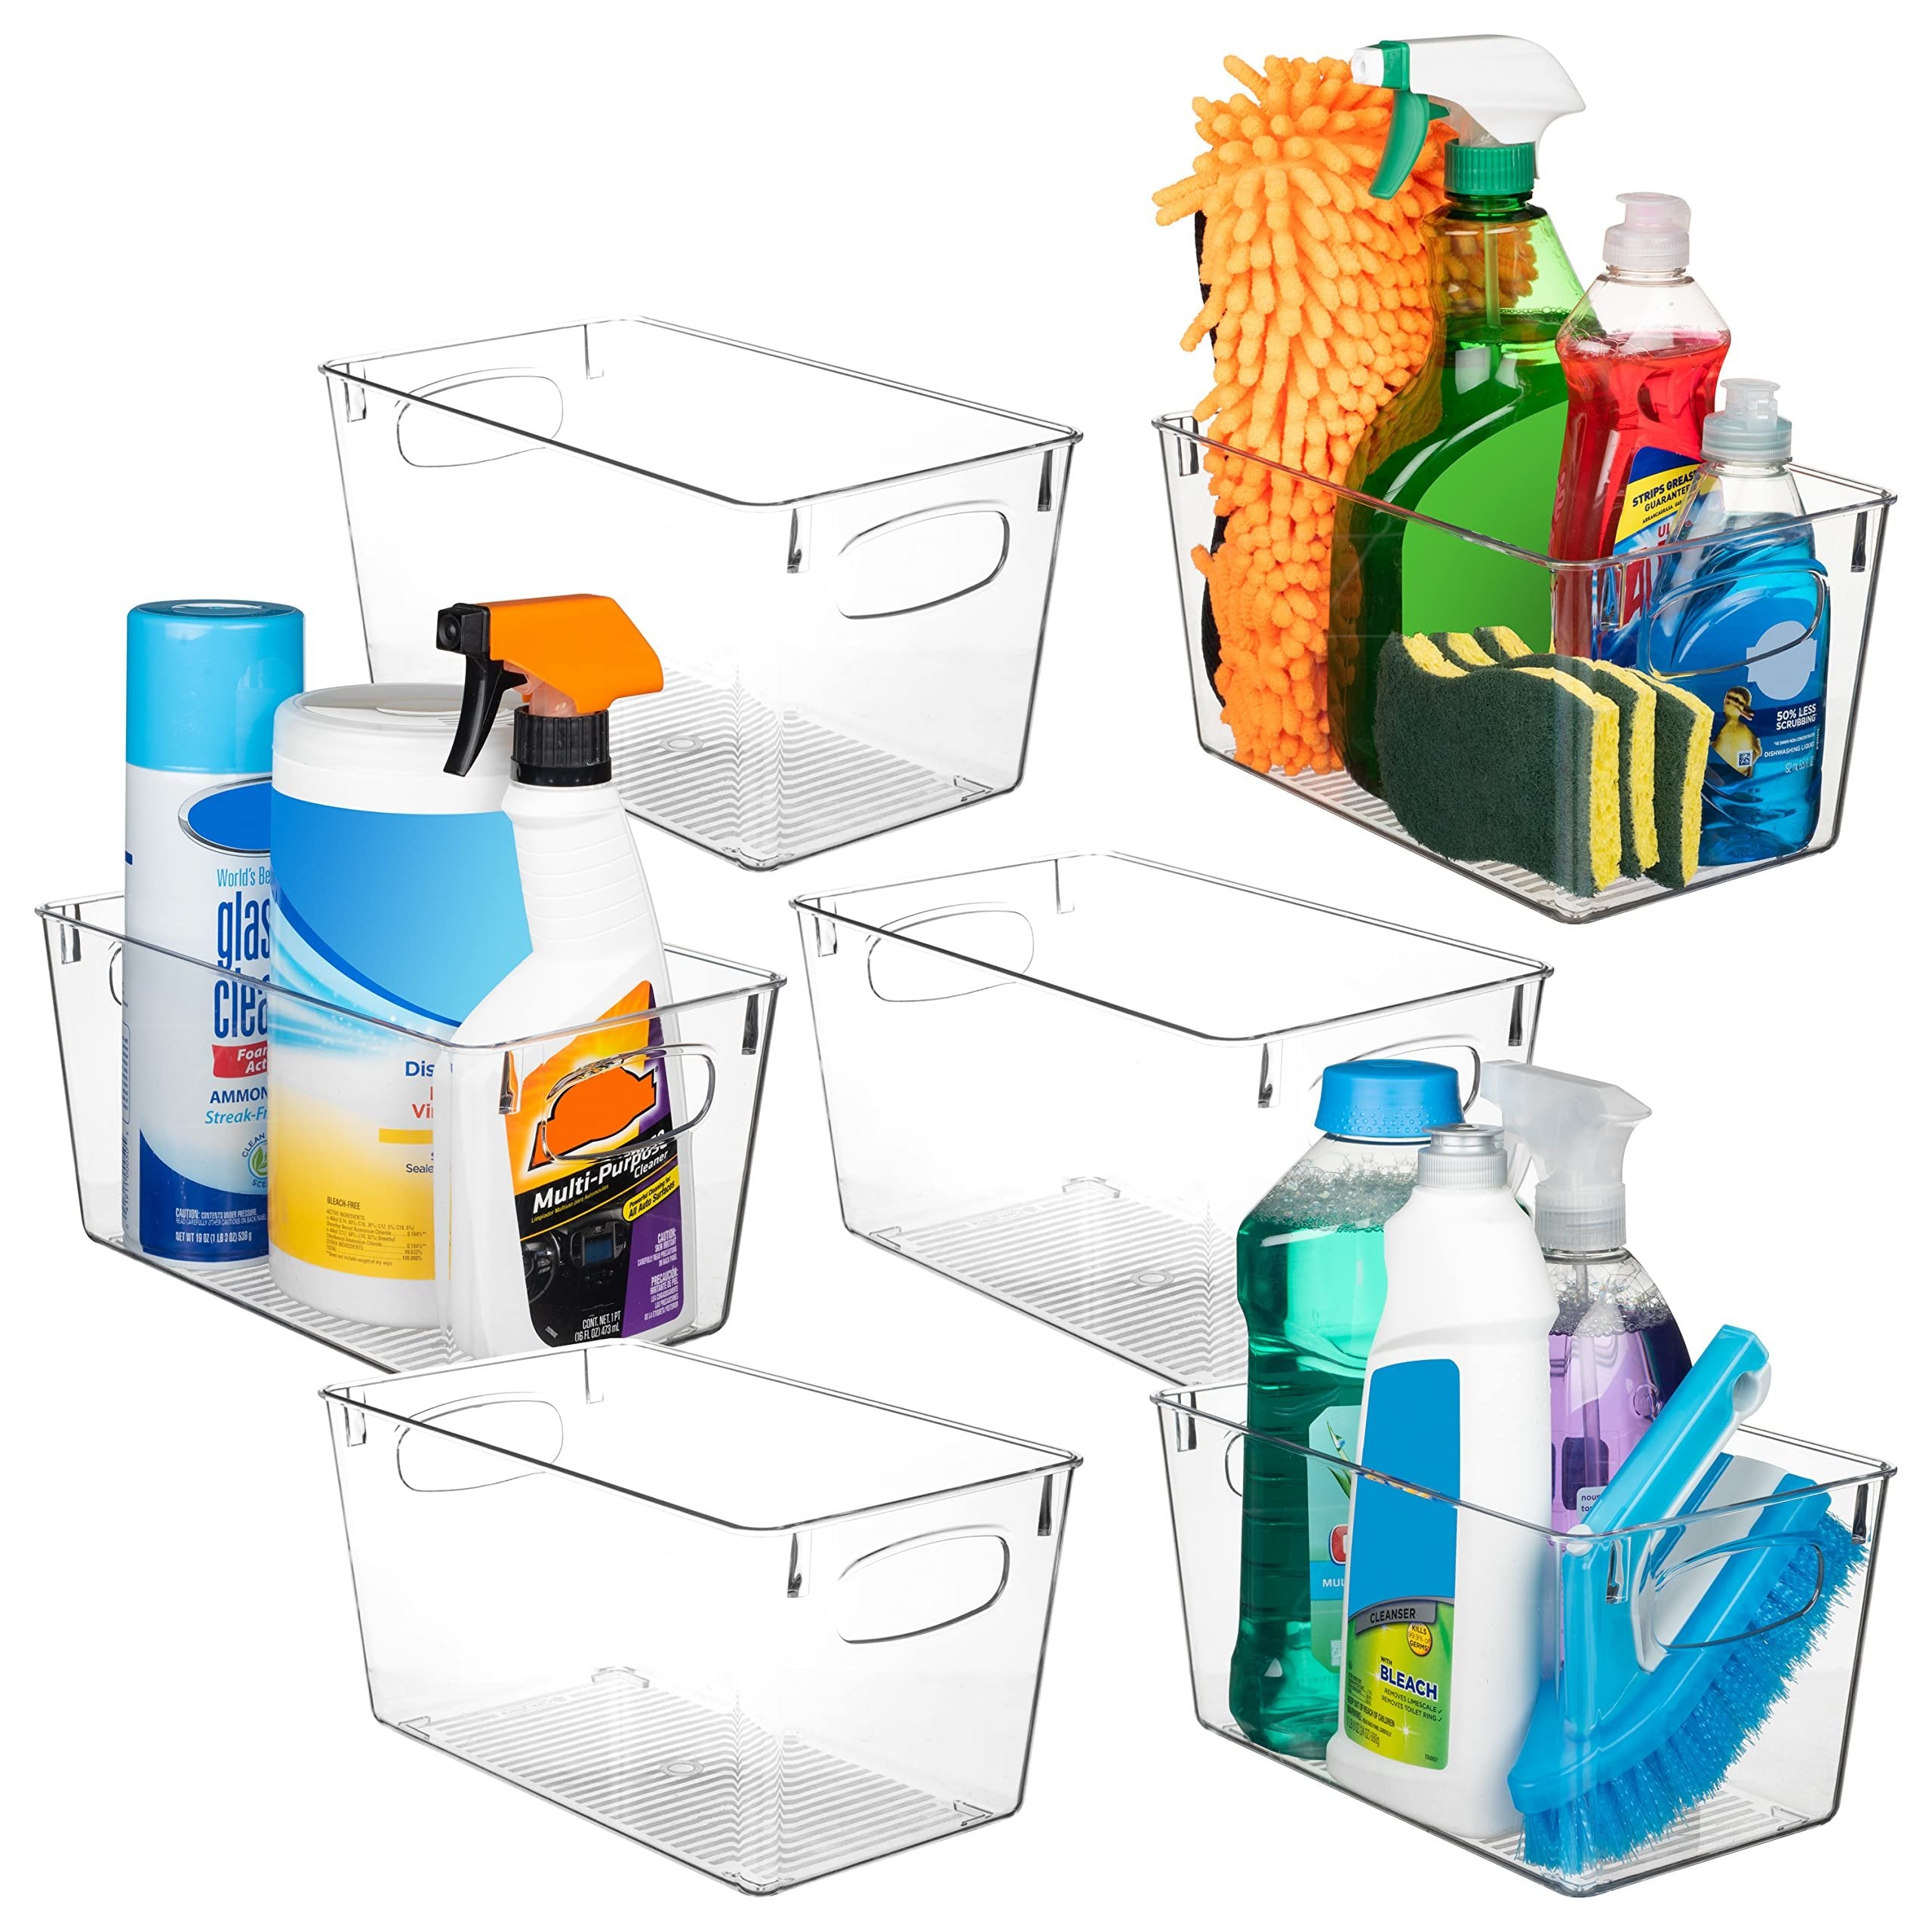 ClearSpace Plastic Bins - Perfect Kitchen Organization or Pantry Storage - Fridge Organizer, Cabinet Organizers